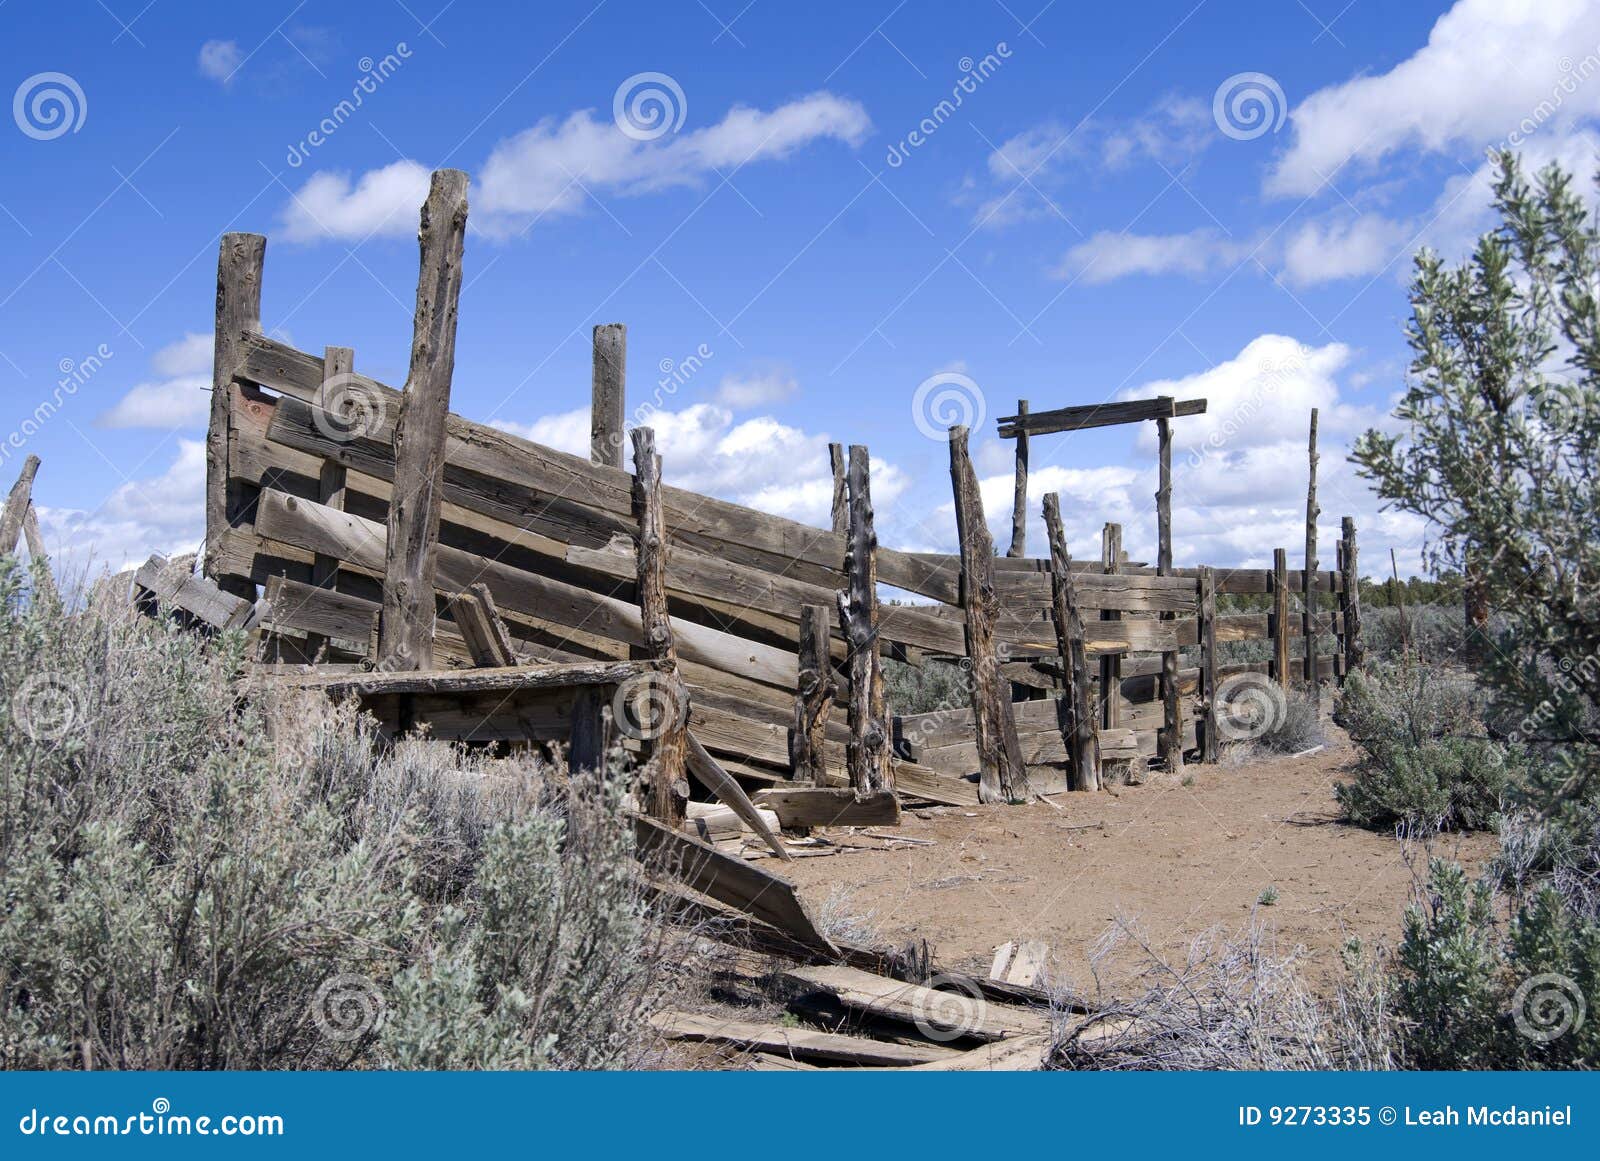 old cattle chute in central oregon desert